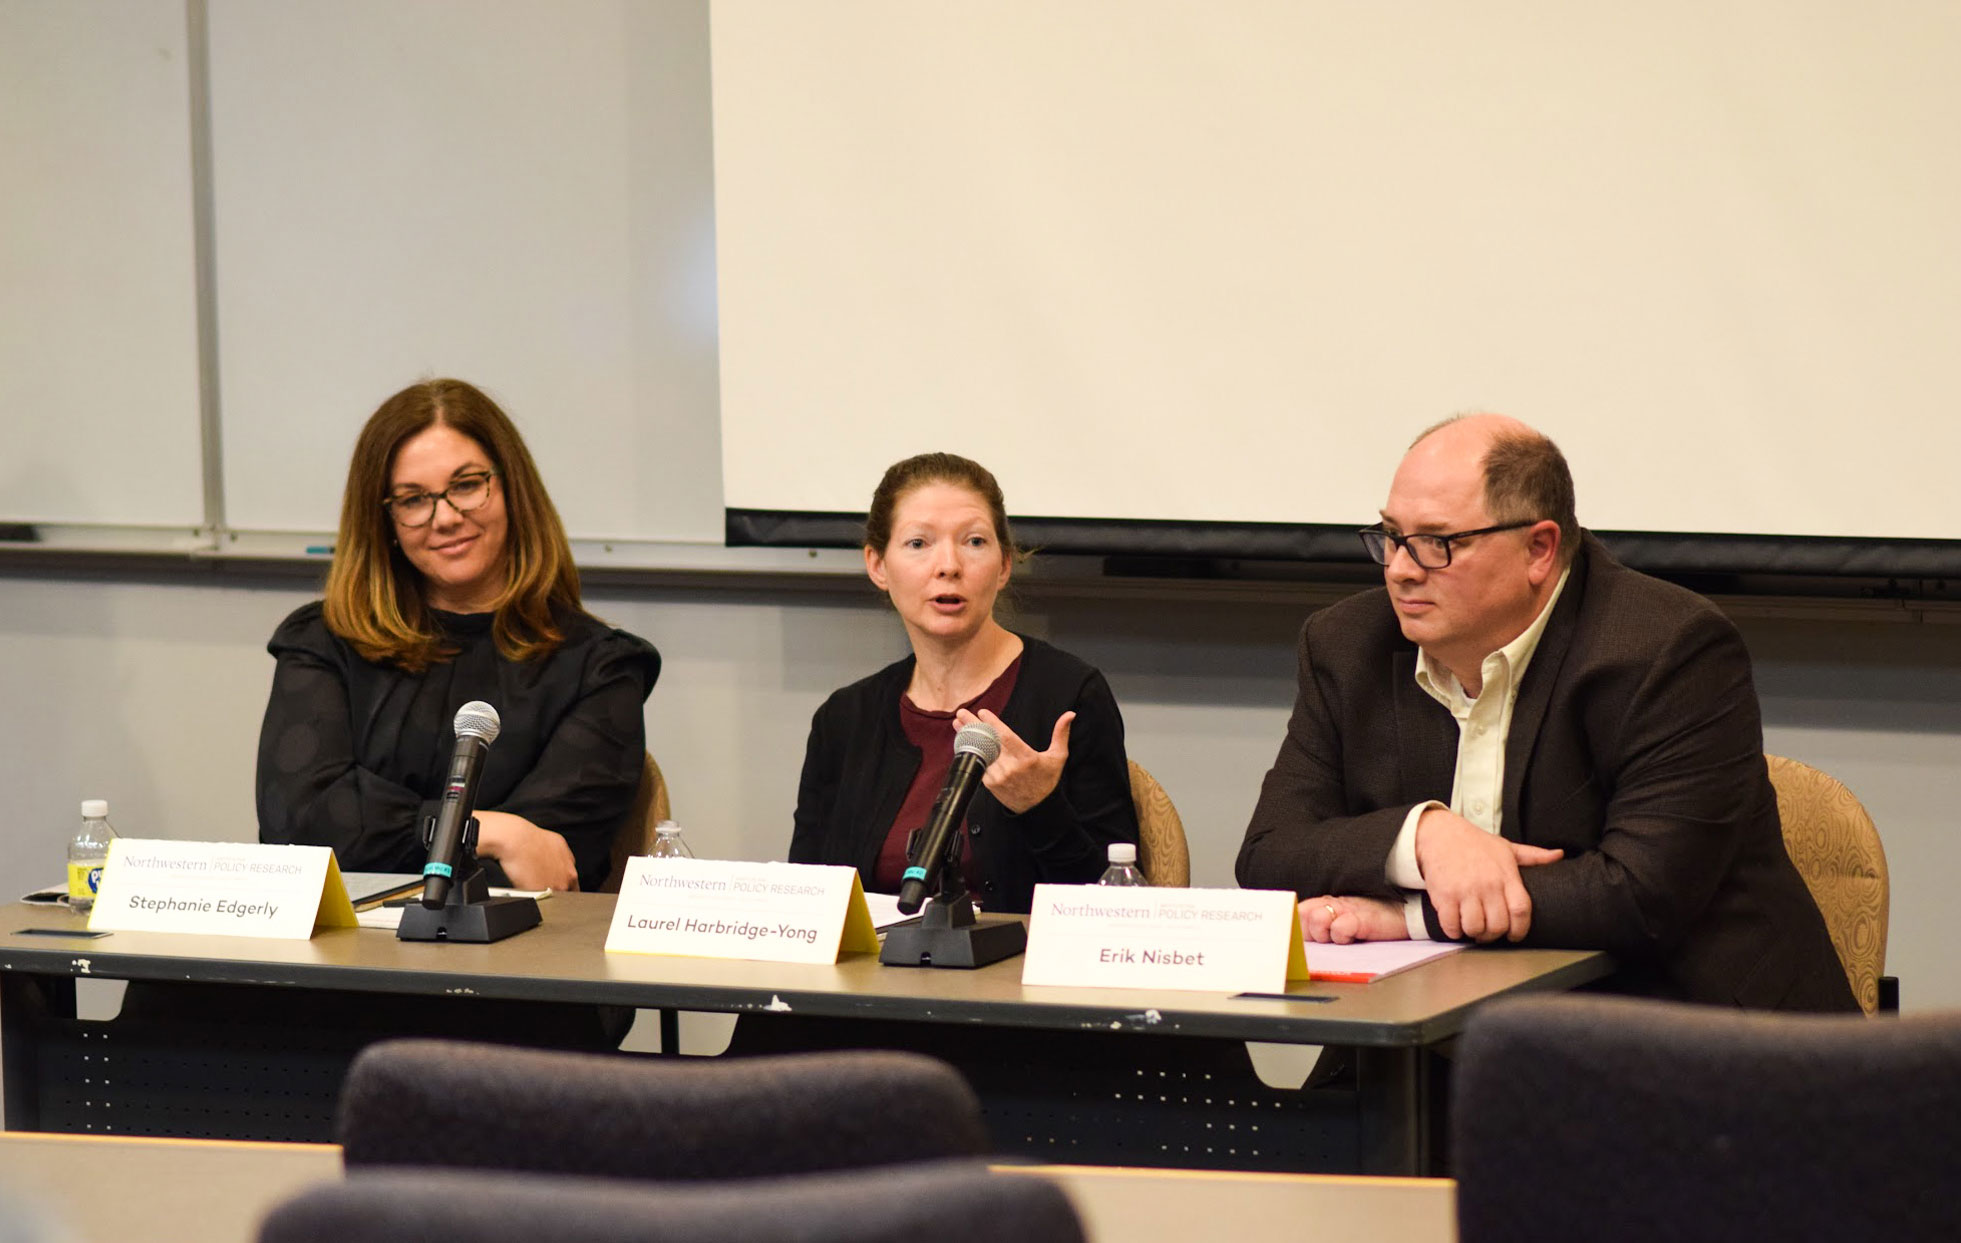 Laurel Harbridge-Yong, Stephanie Edgerly, and Erik Nisbet on a panel